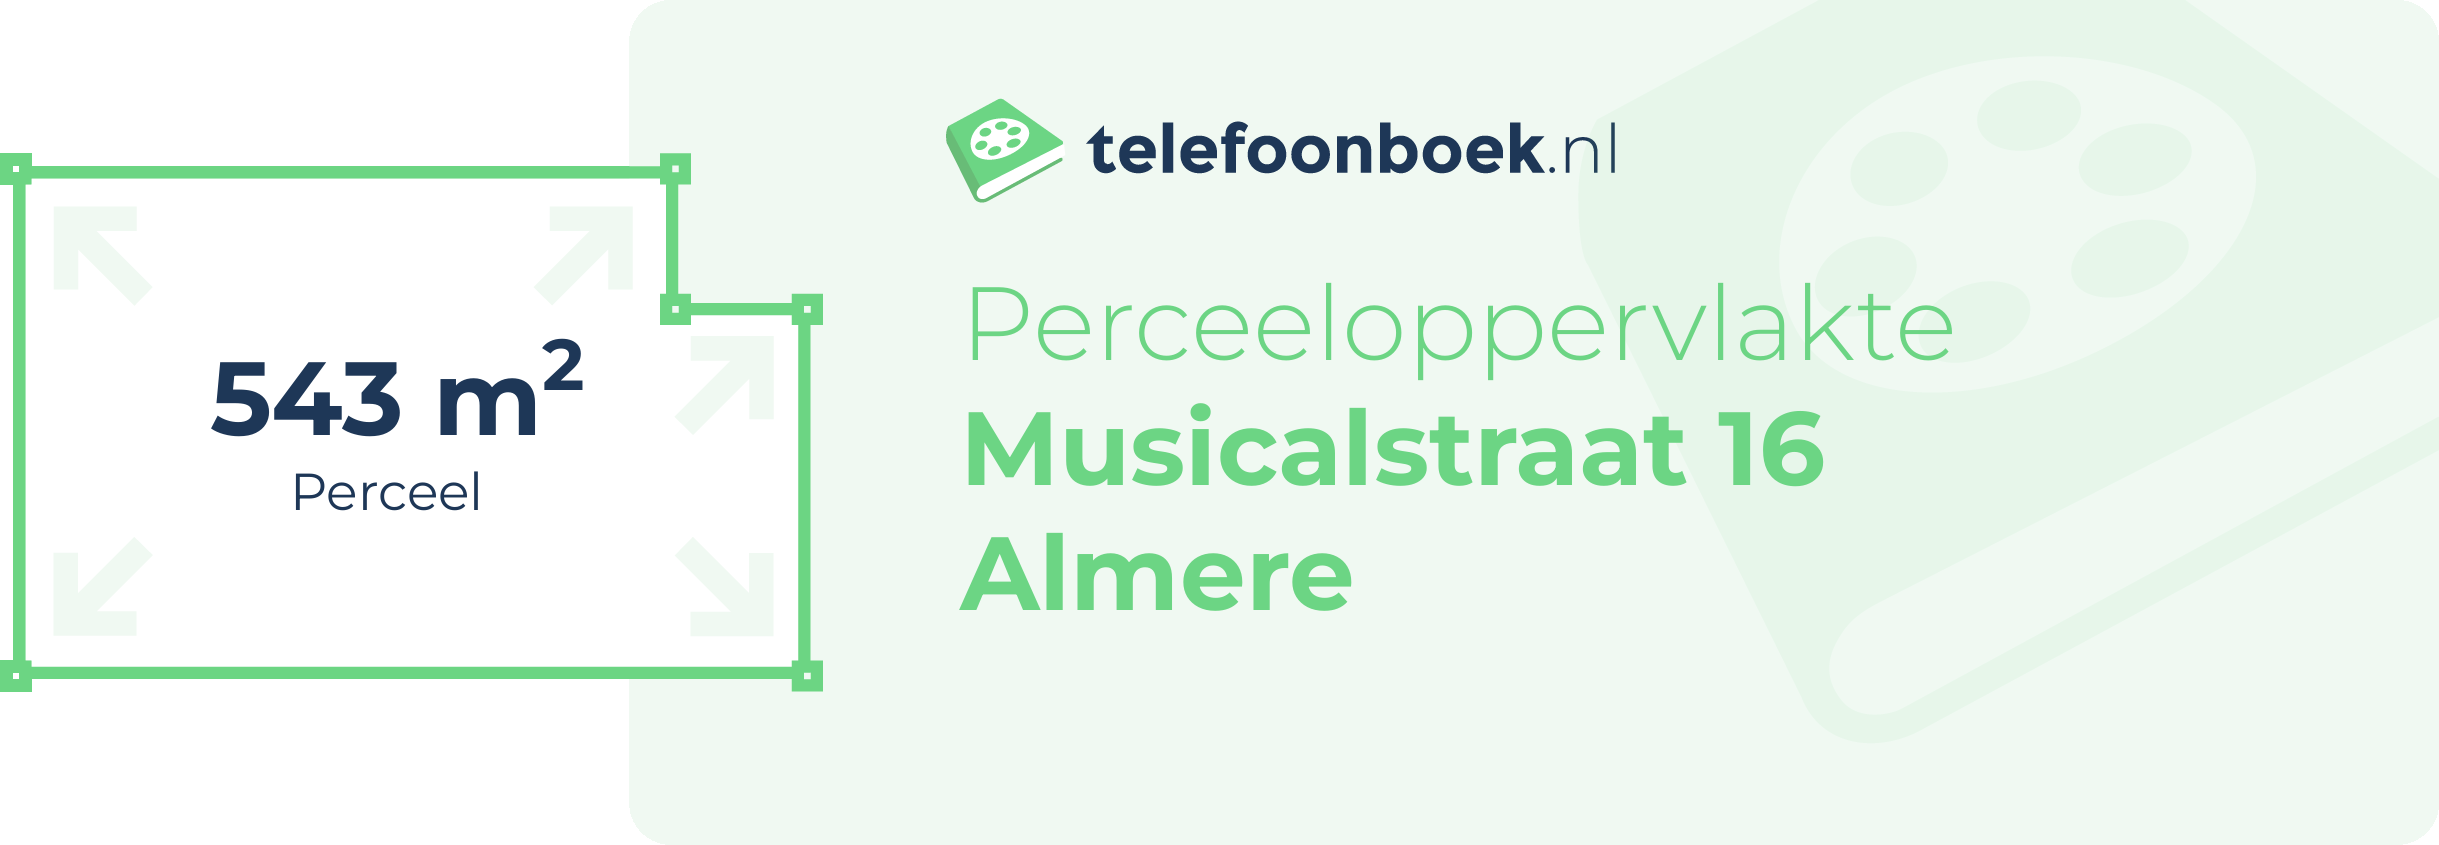 Perceeloppervlakte Musicalstraat 16 Almere